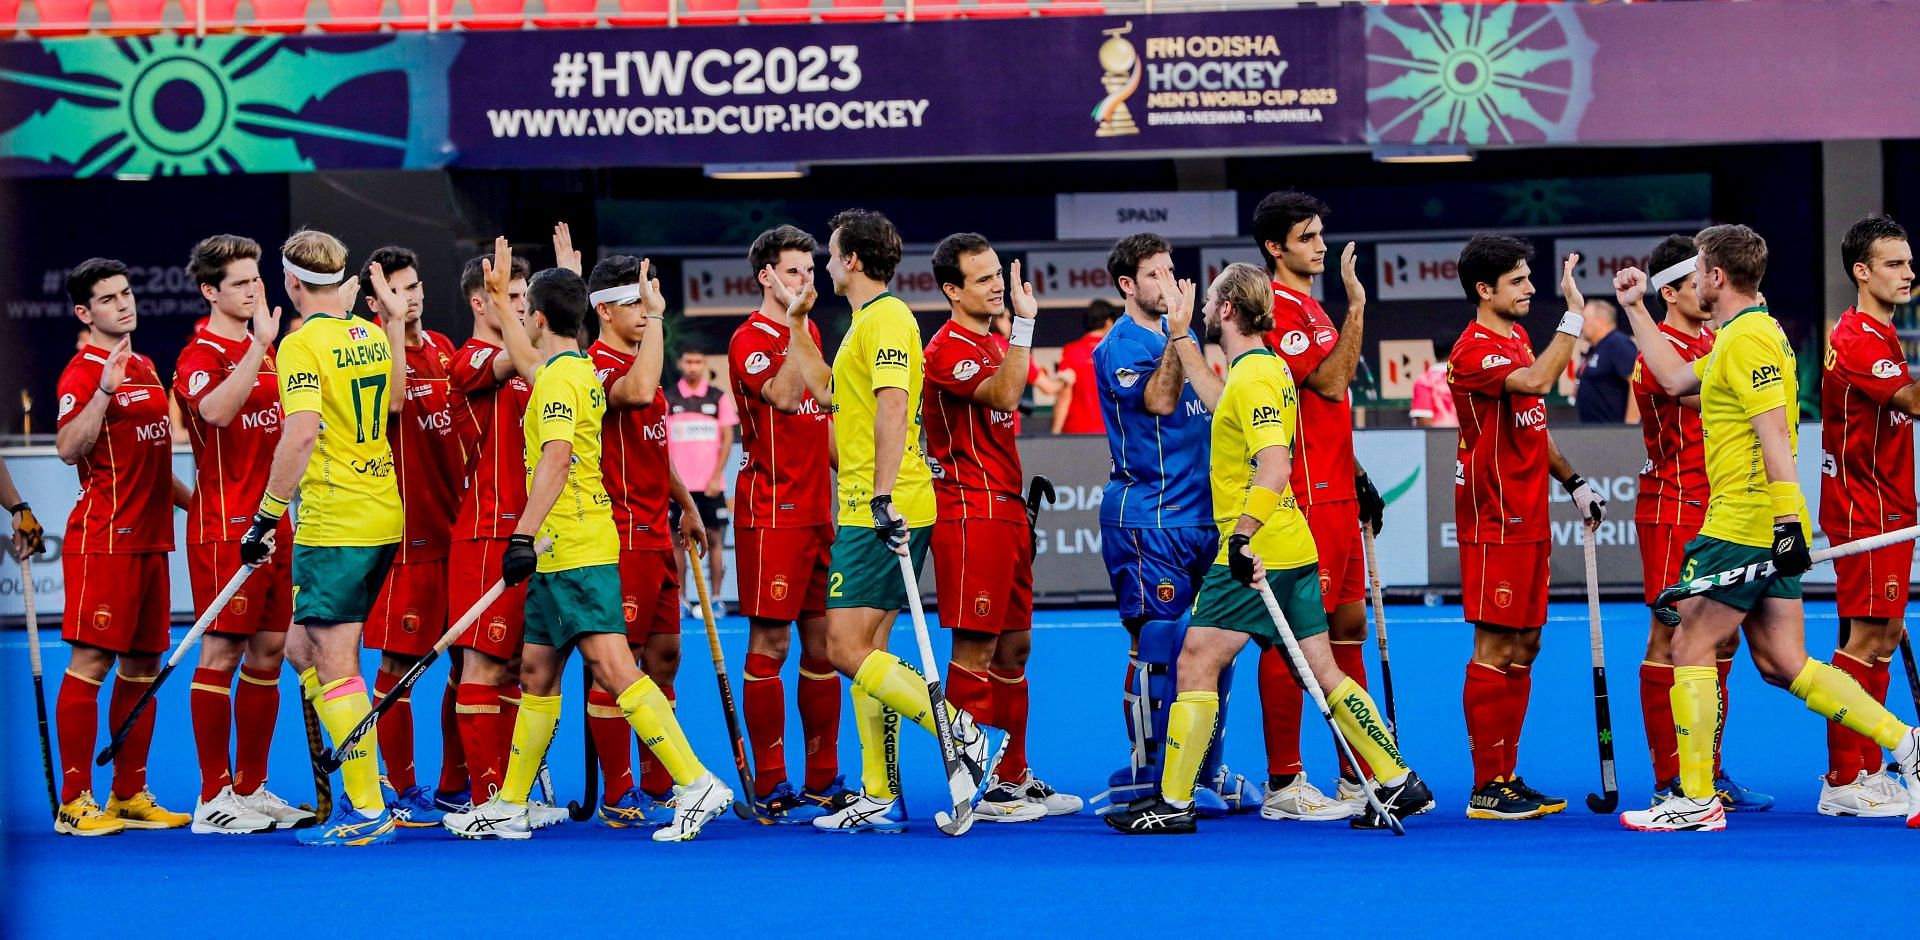 Australia vs Spain in Hockey World Cup quarter-finals